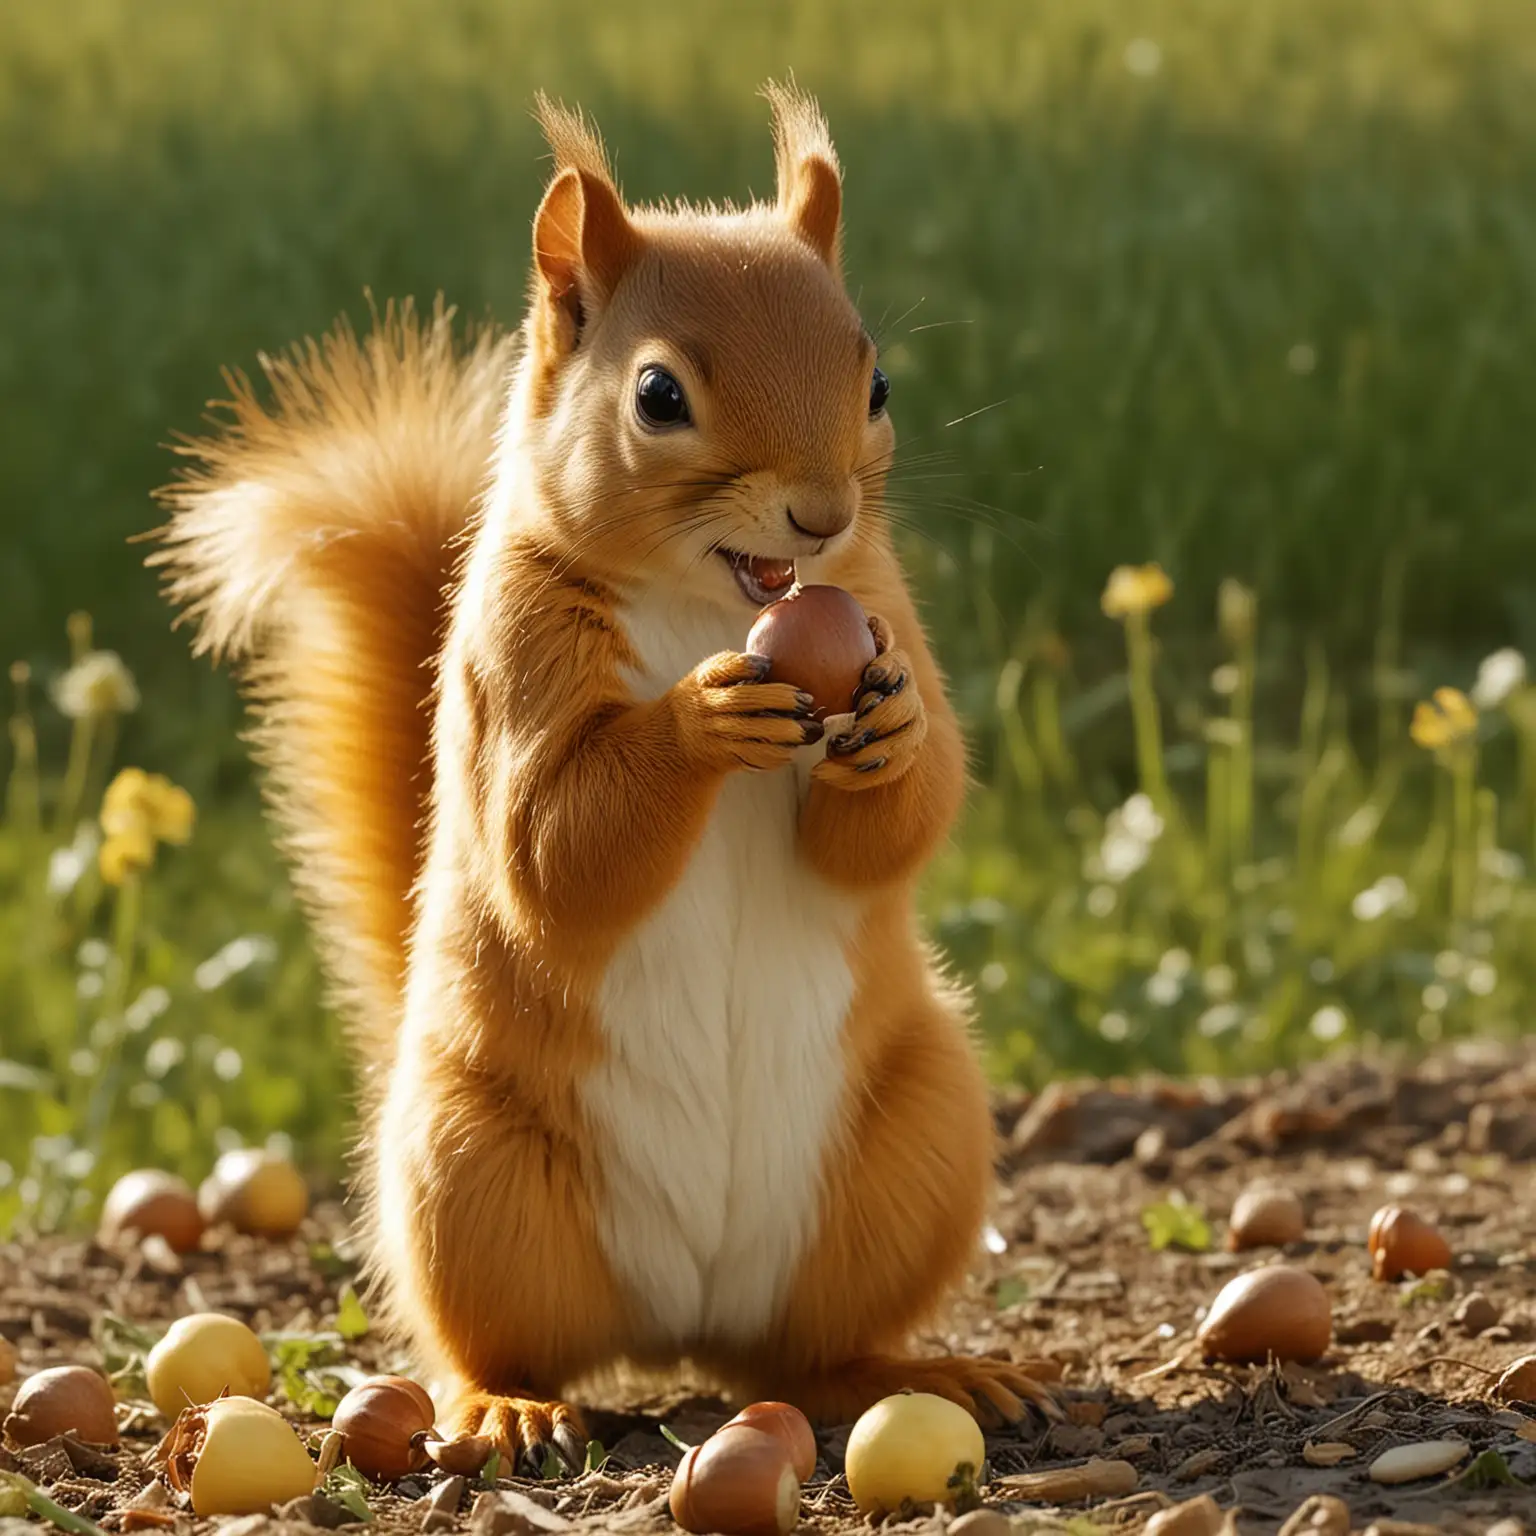 Fantasy Movie Still Buttercup Squirrel Eating Acorn in Vibrant Field